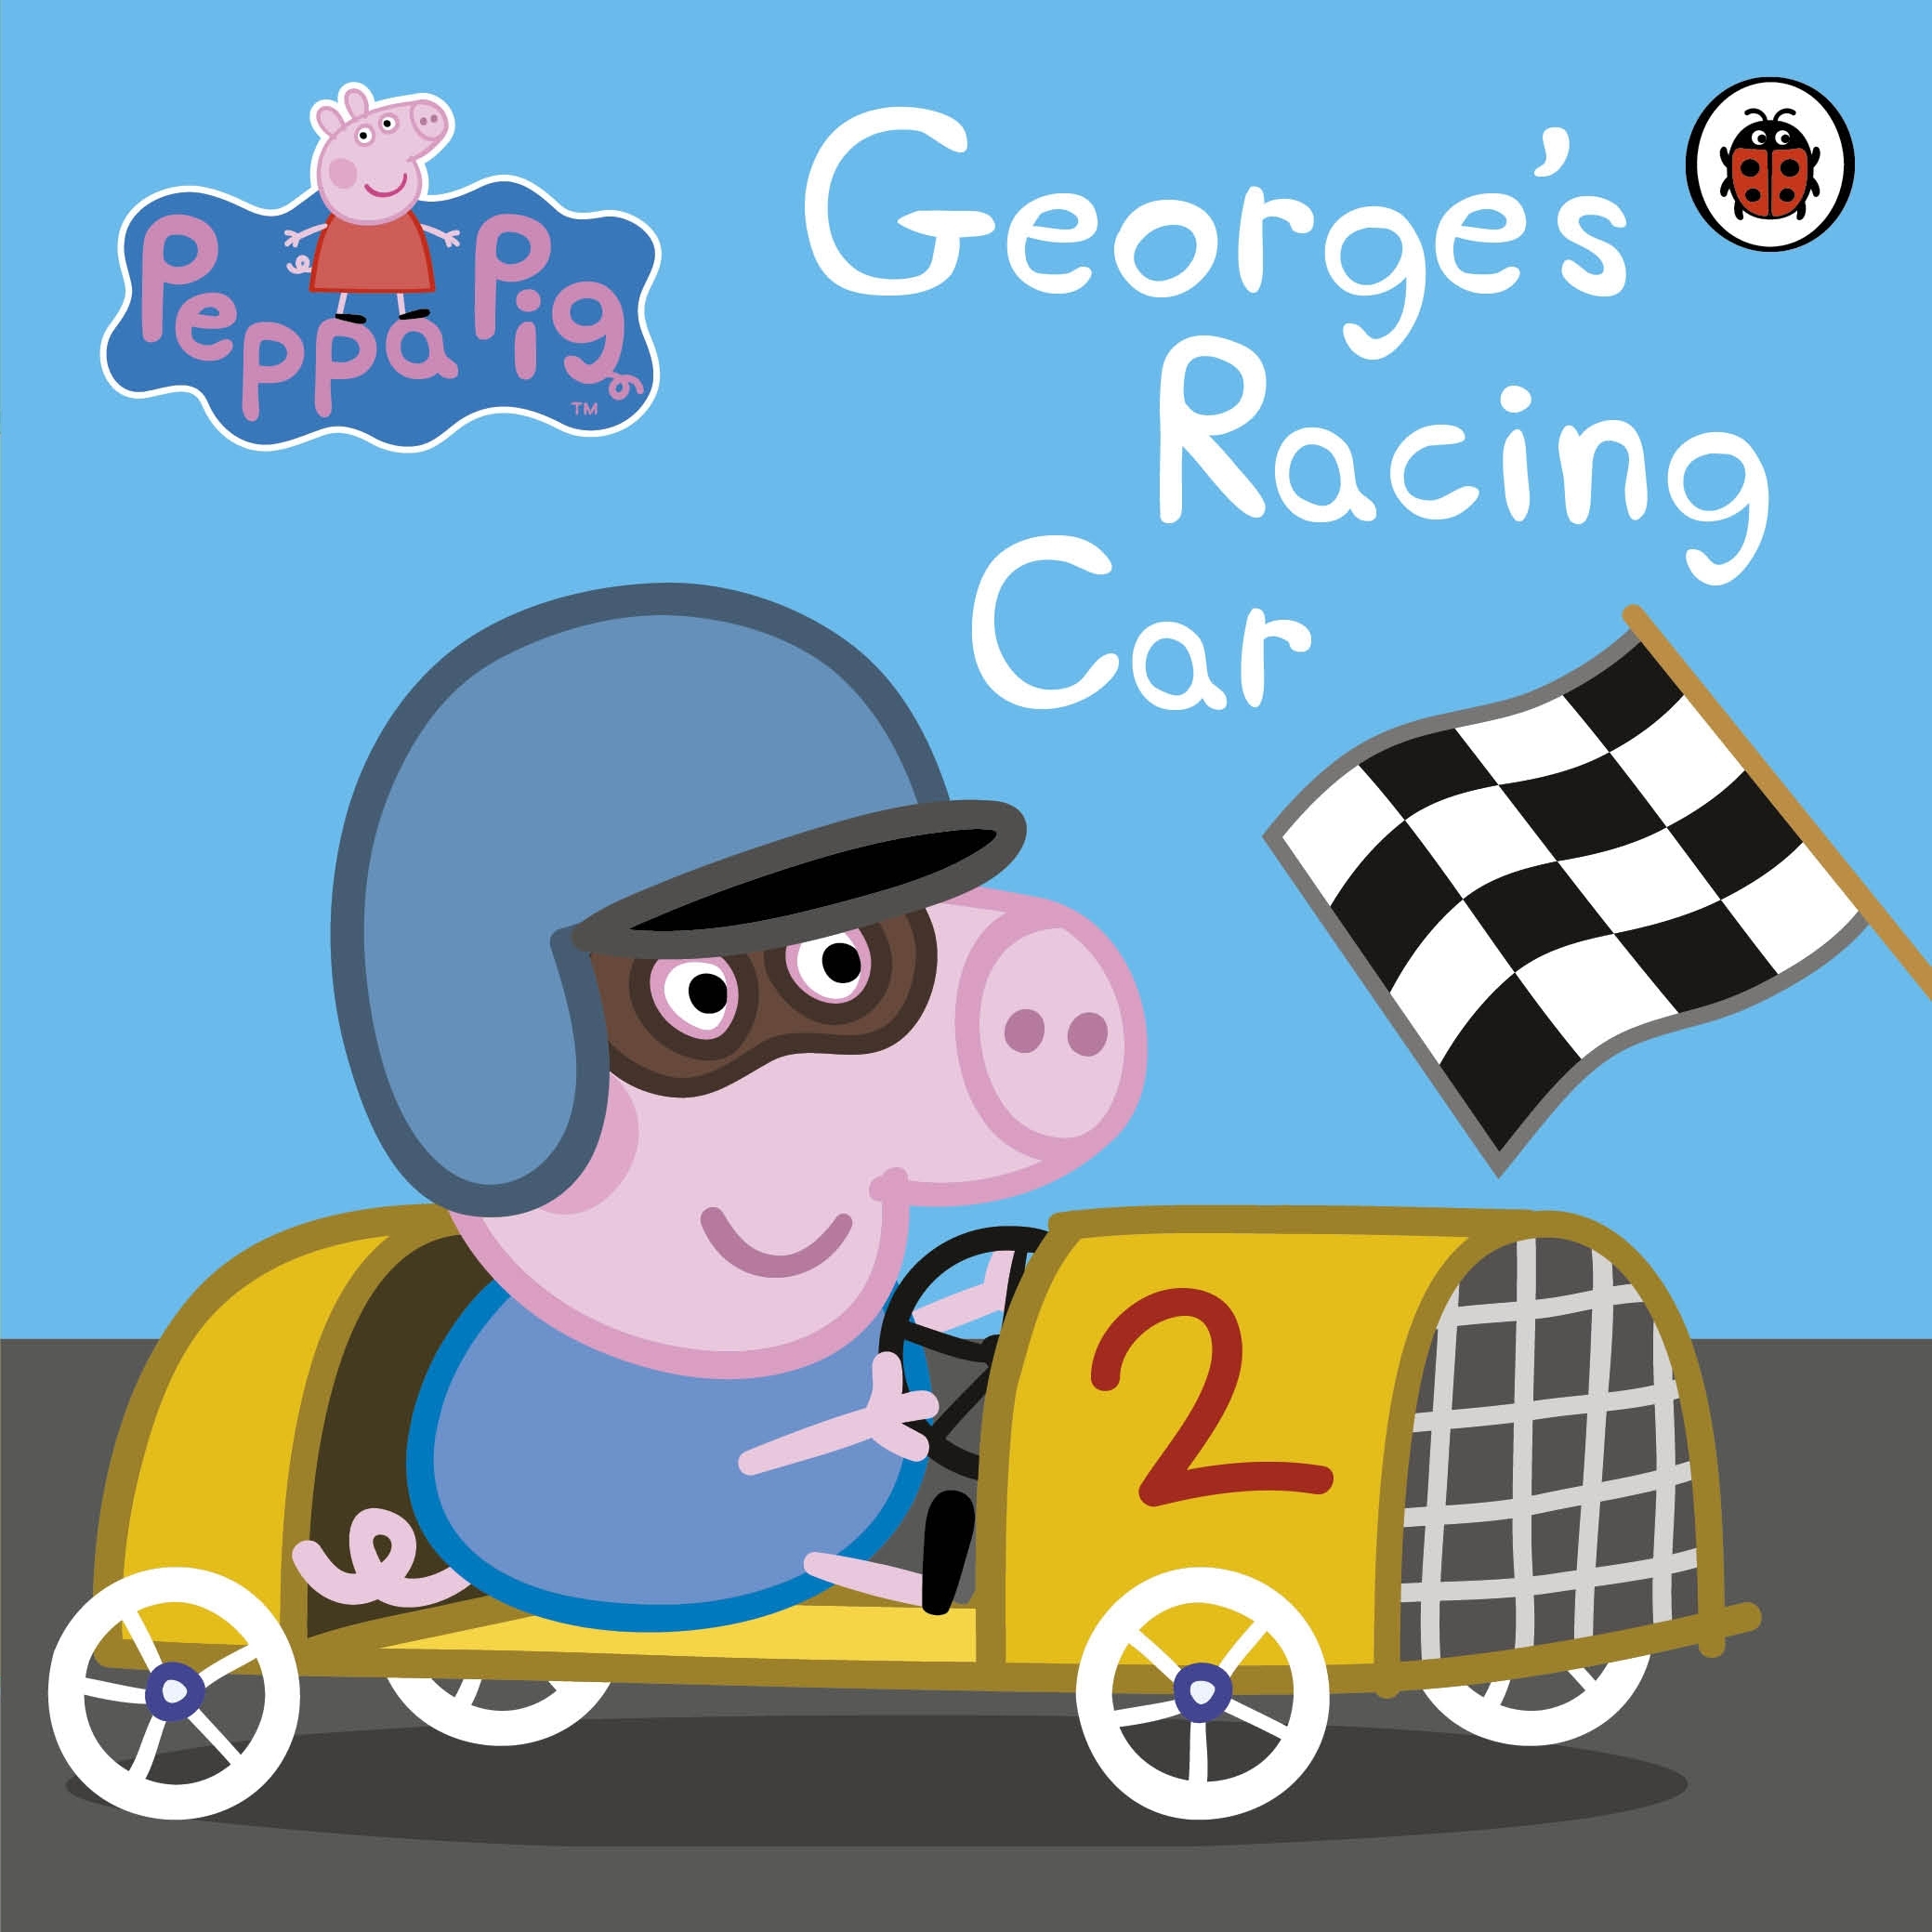 Peppa Pig George's Racing Car (Board Book)